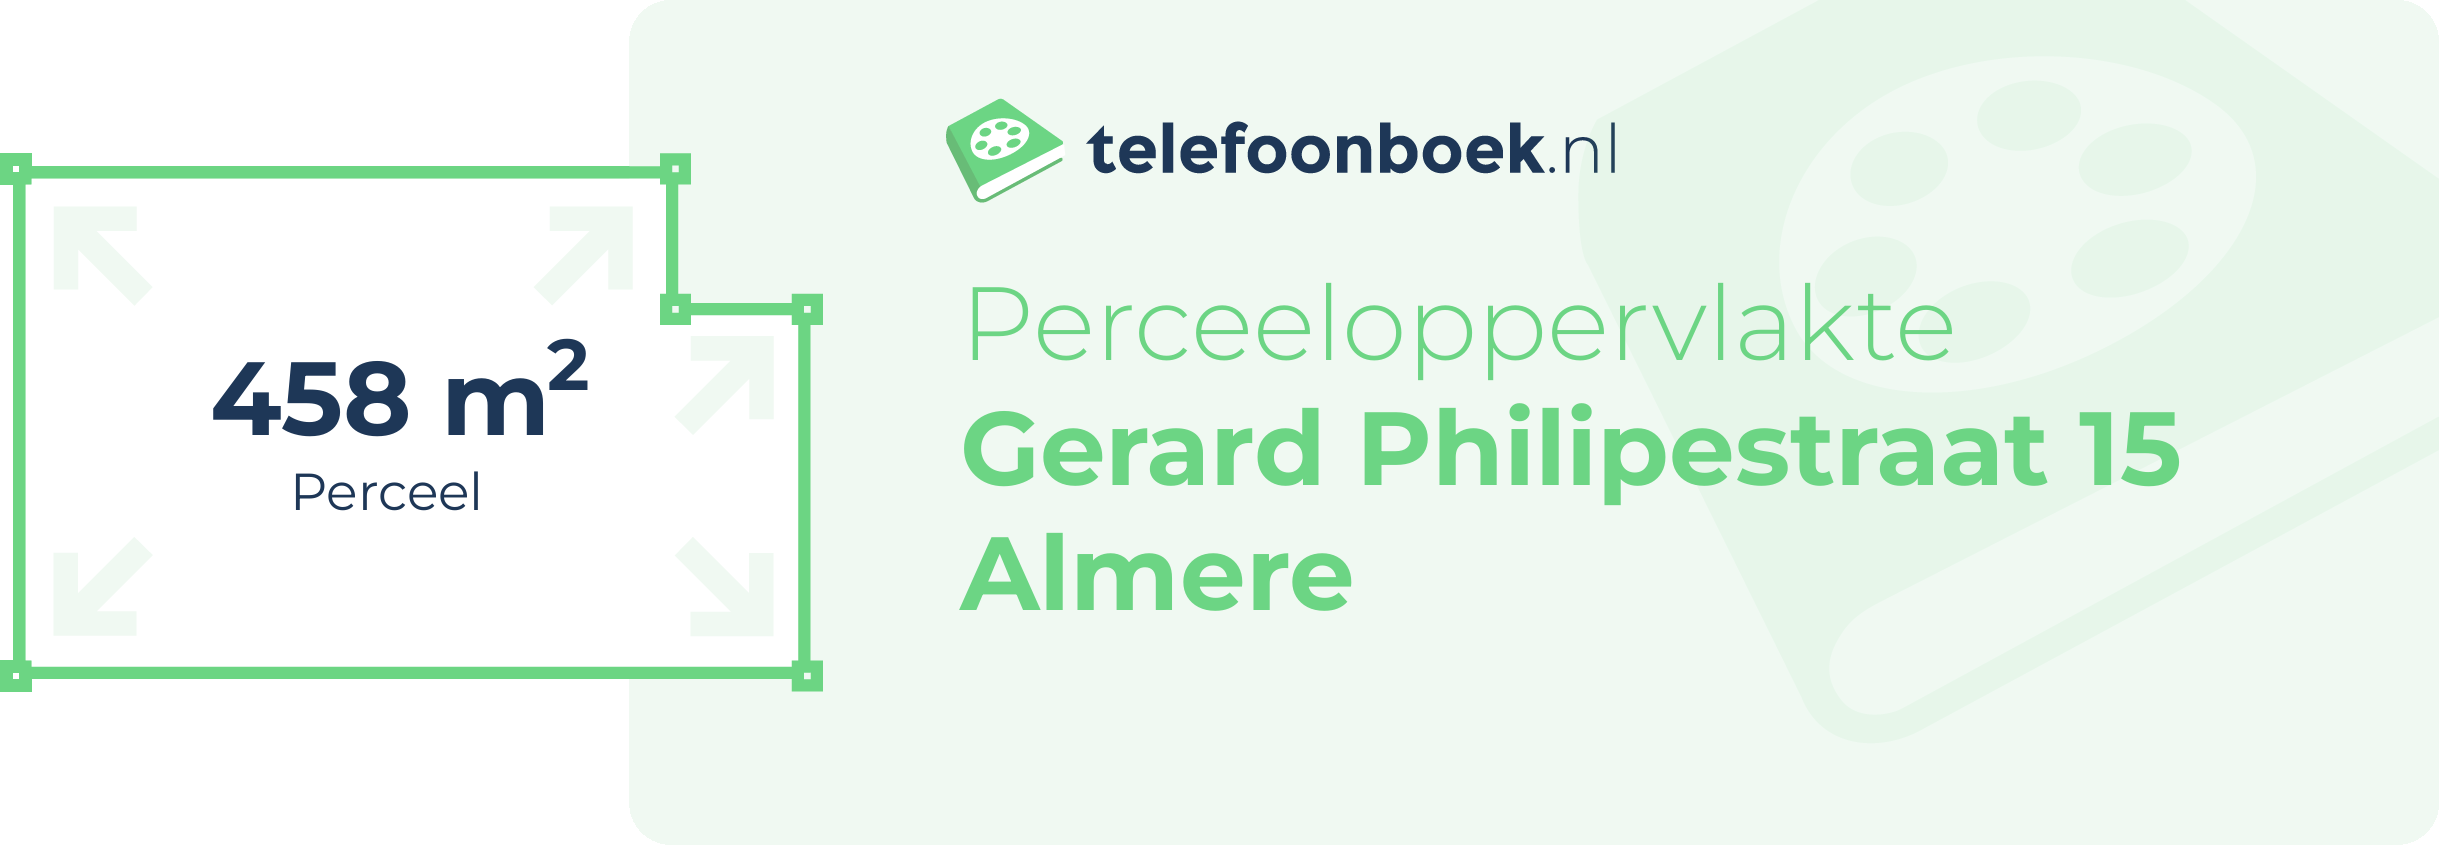 Perceeloppervlakte Gerard Philipestraat 15 Almere